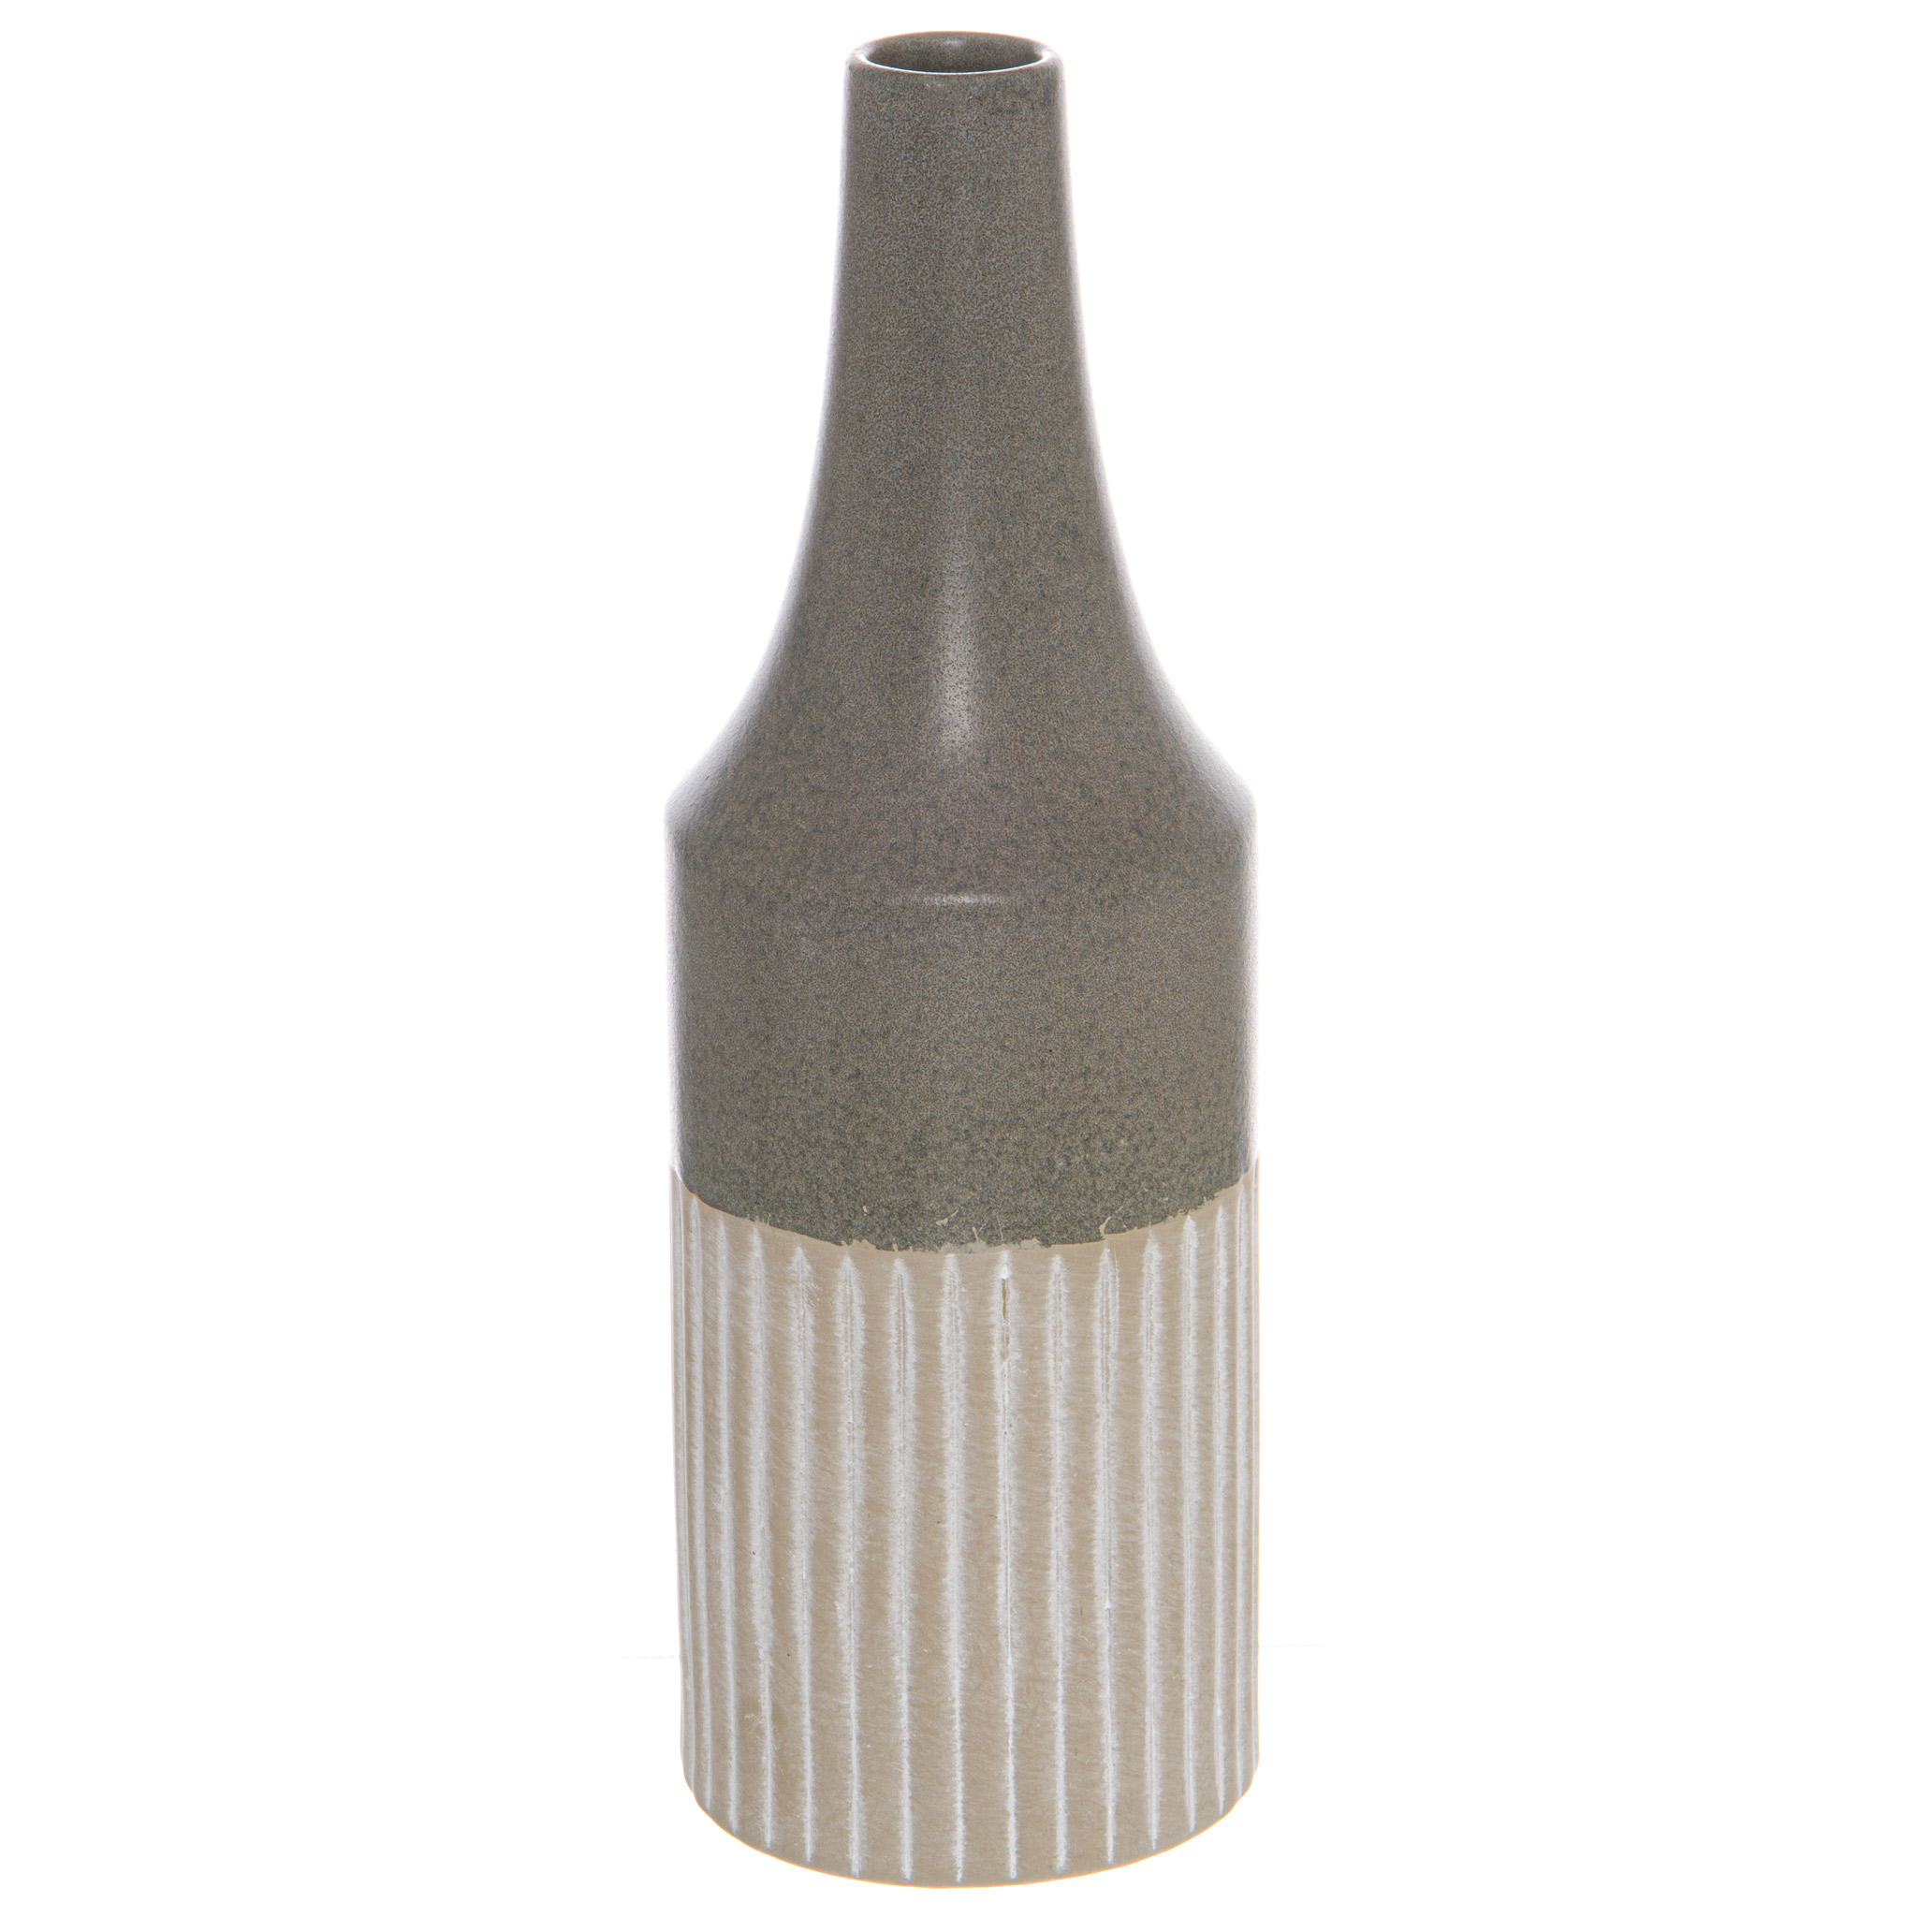 Mason Collection Grey Ceramic Convex Vase - Image 1